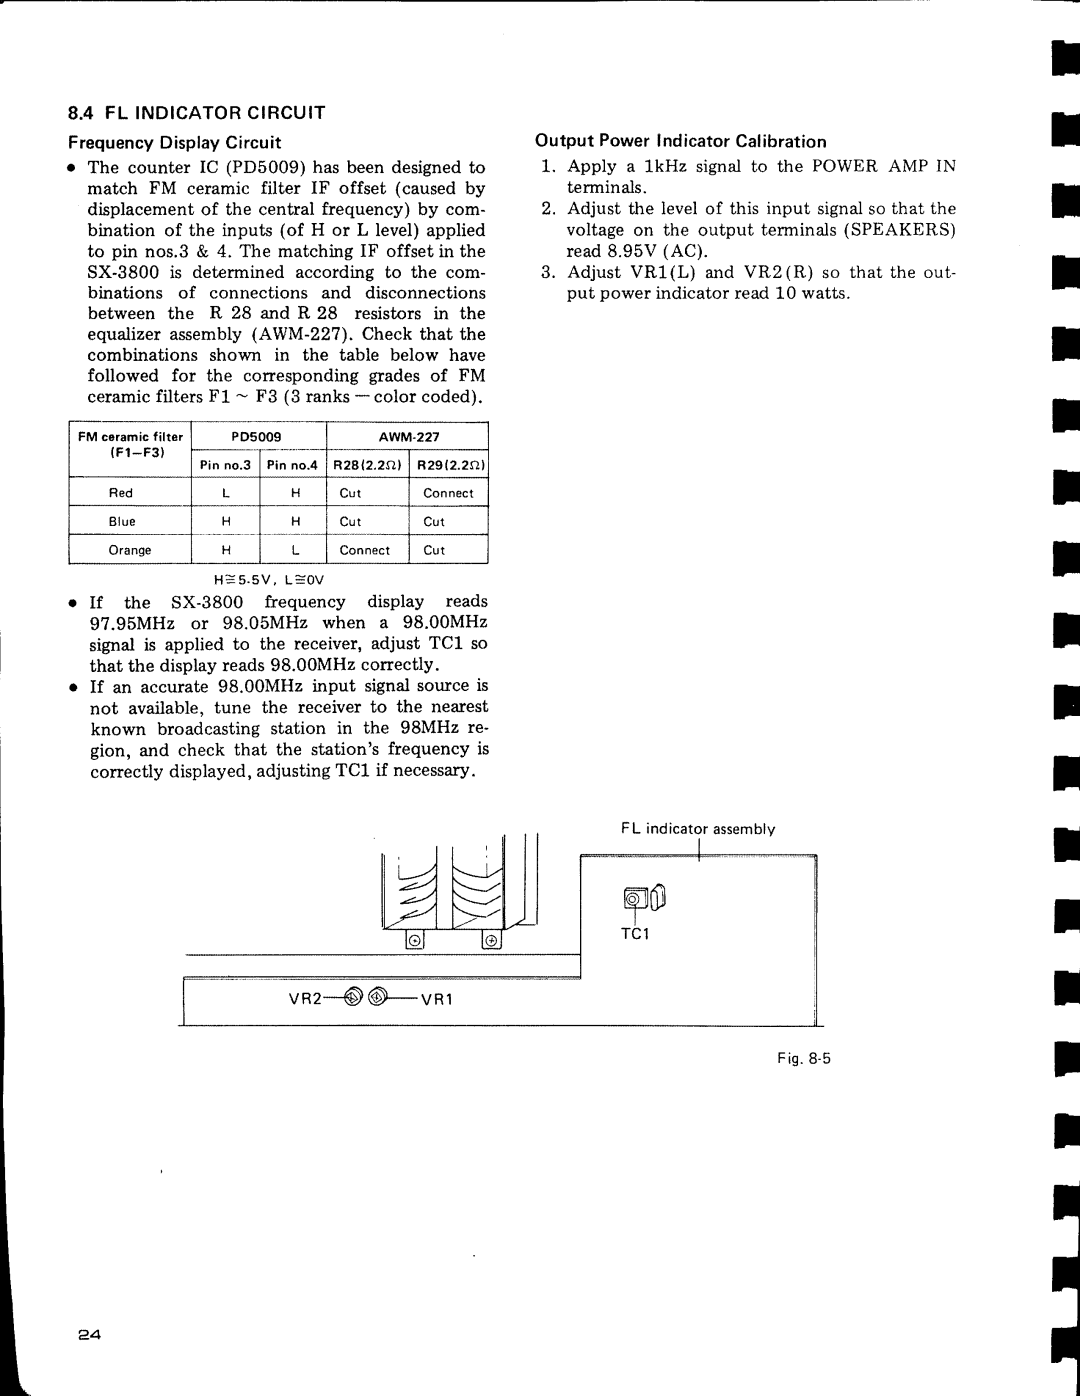 Pioneer SX-3800 manual I I I, vR2*€ @vnr 